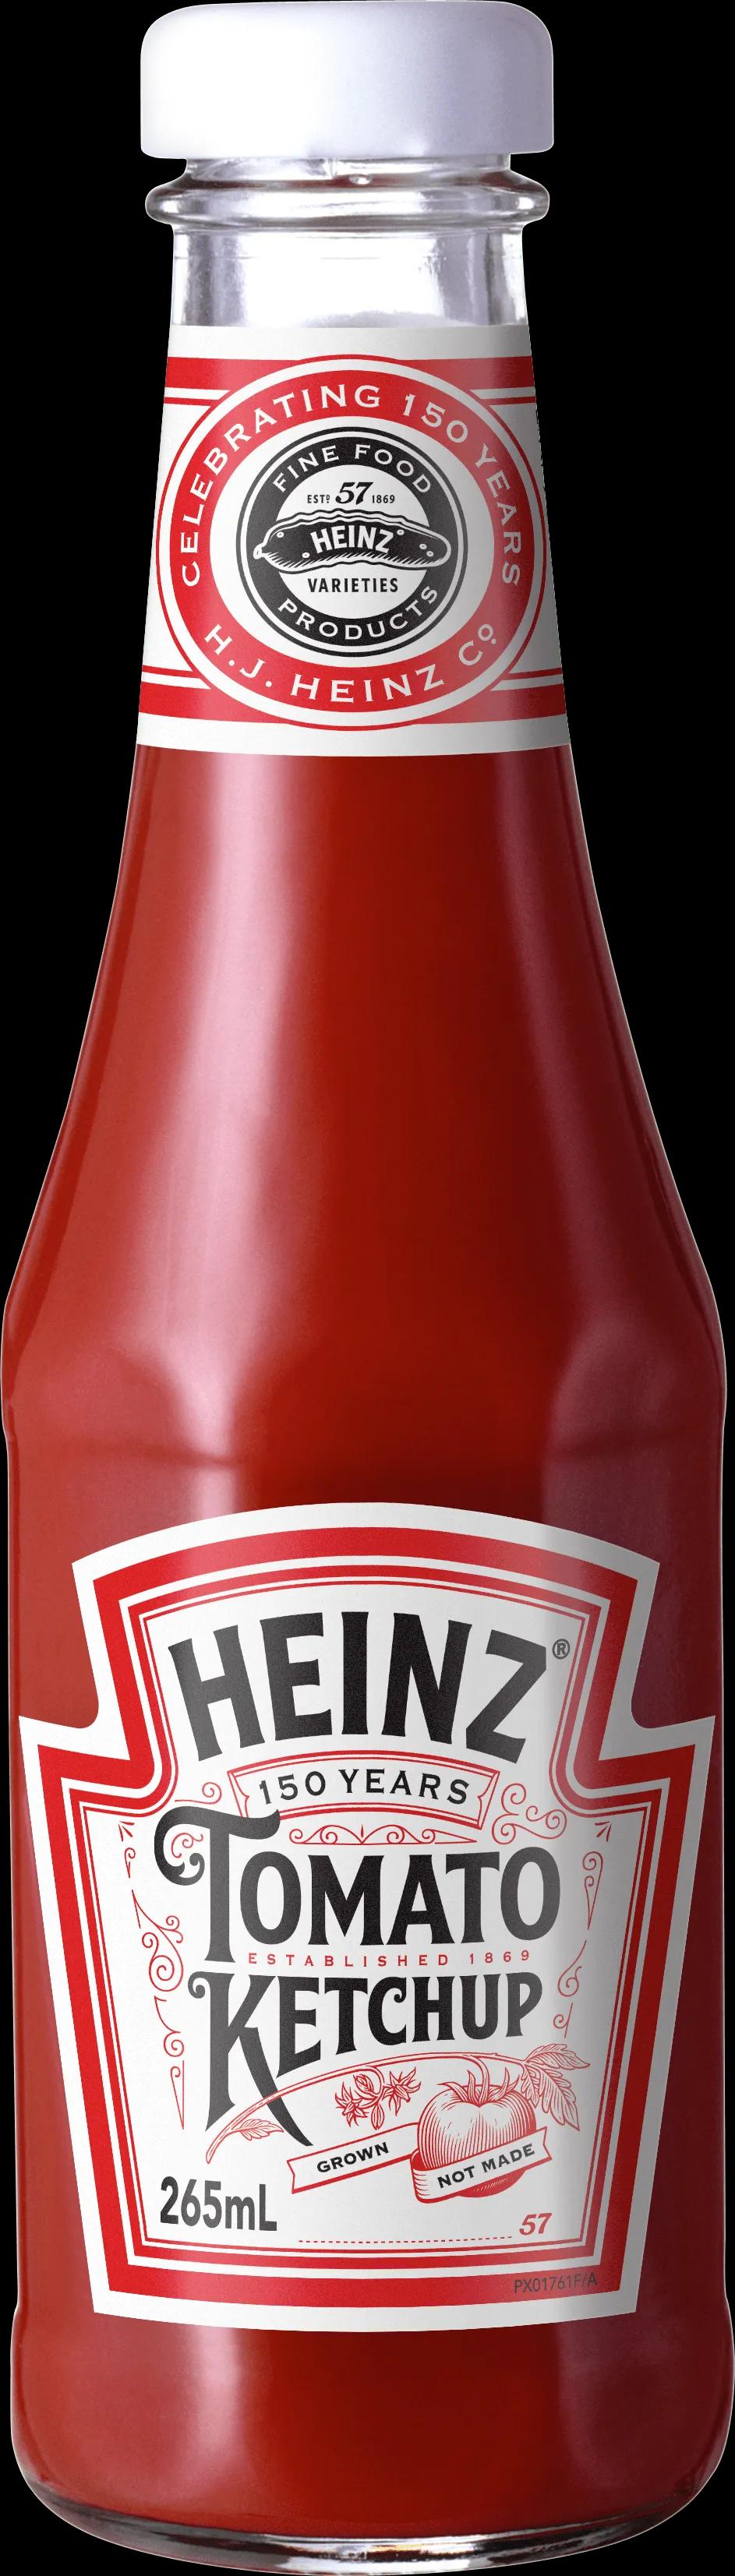 Heinz Tomato Ketchup 265mL | Food Service